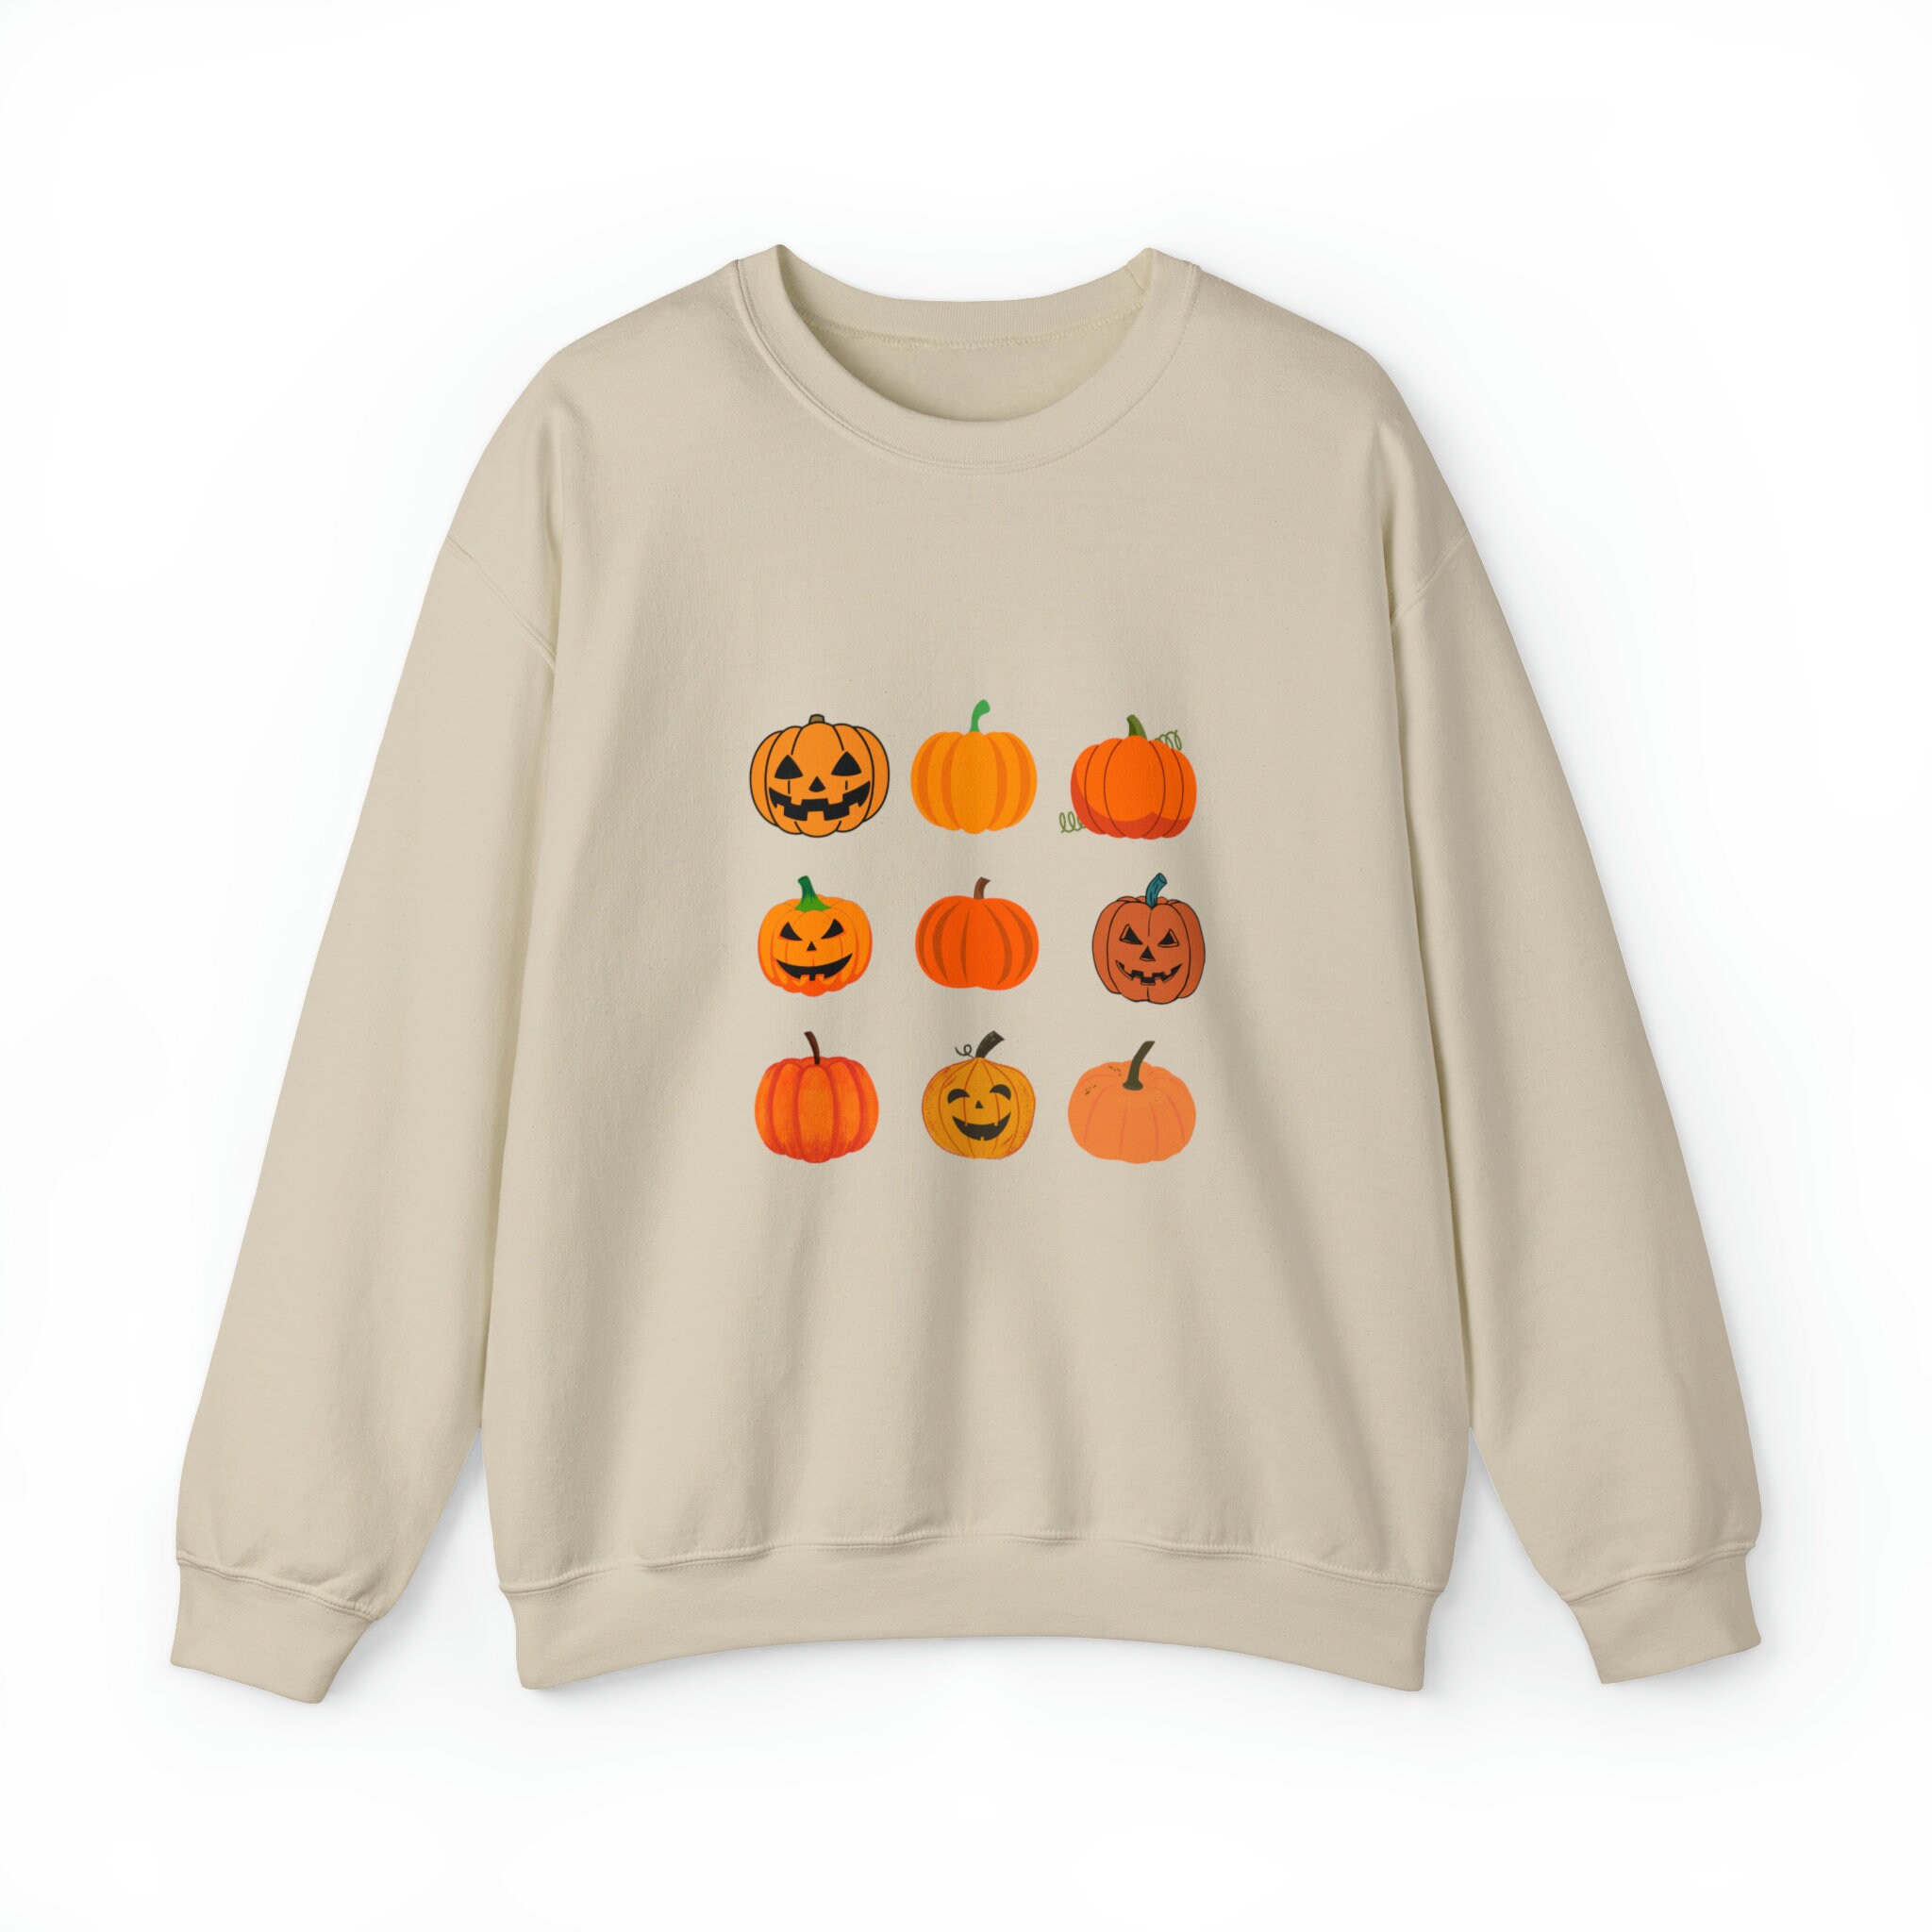 Discover Halloween Pumpkin Crewneck Sweatshirt - Fall Clothing - Art - Orange Pumpkins - Autumn Winter Clothes Long Sleeve